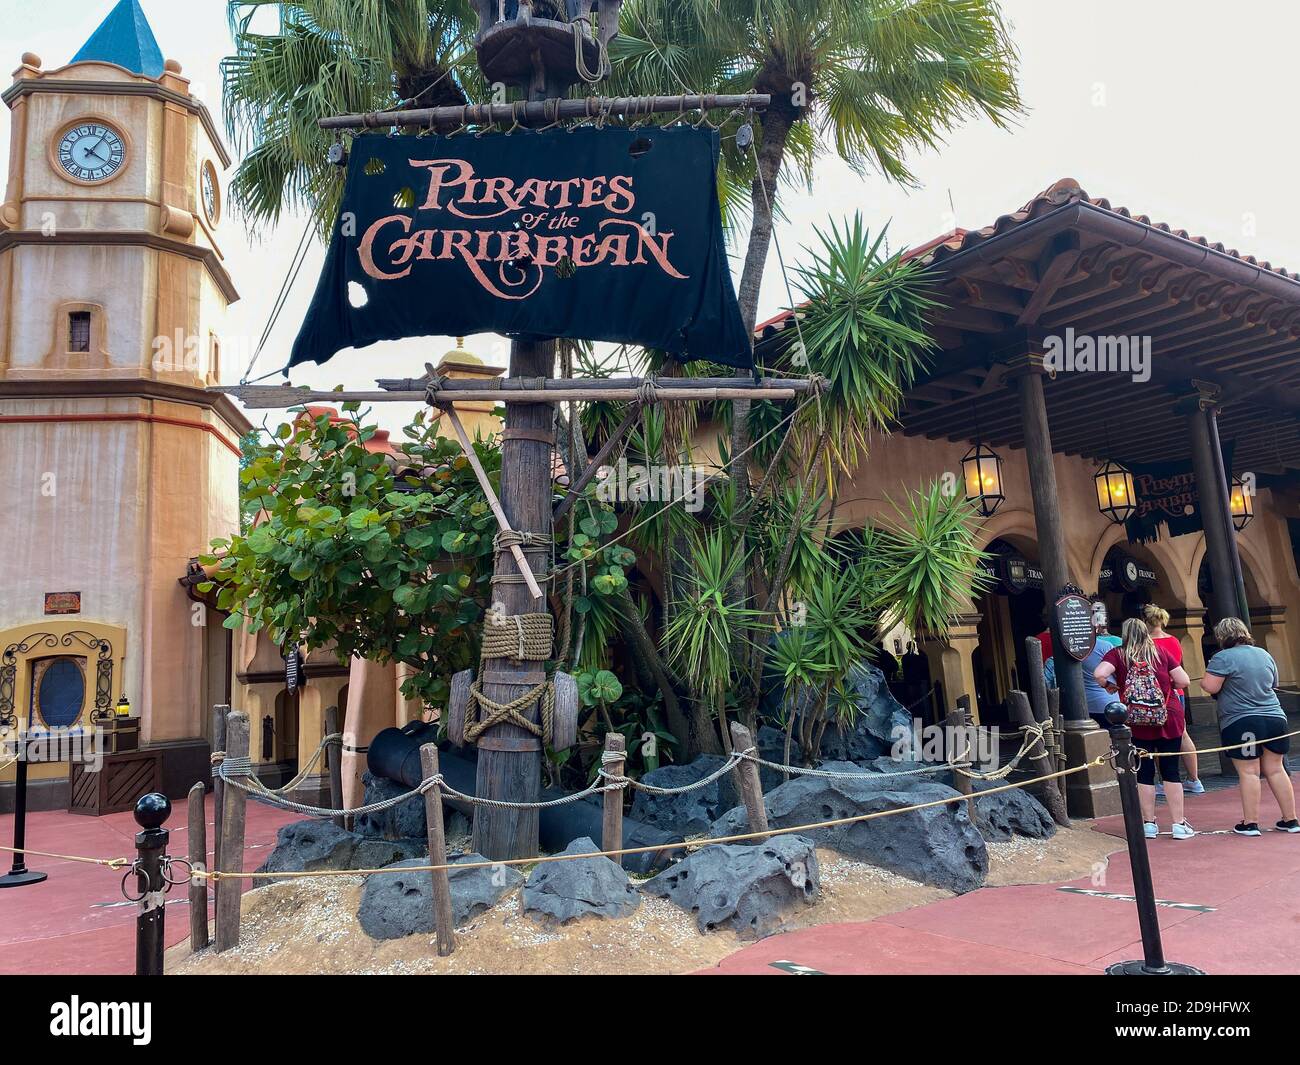 Orlando,FL/USA-7/25/20: The entrance to the Pirates of the Caribbean ride at Magic Kingdom in Disney World Orlando, Florida. Stock Photo